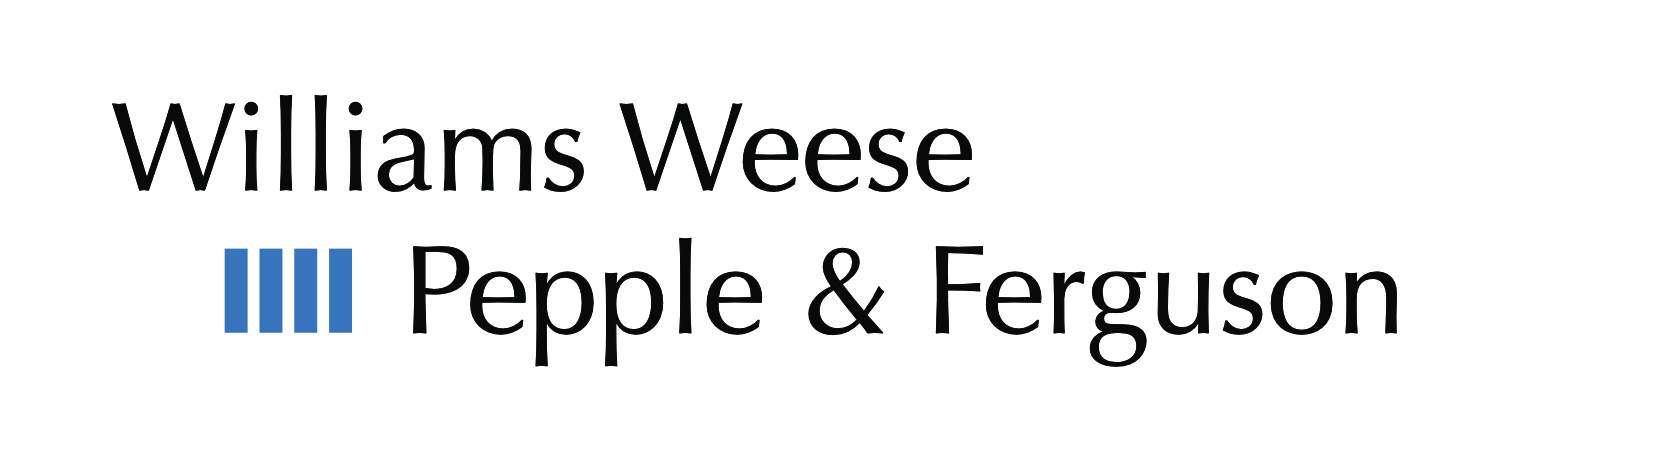 wwpf logo